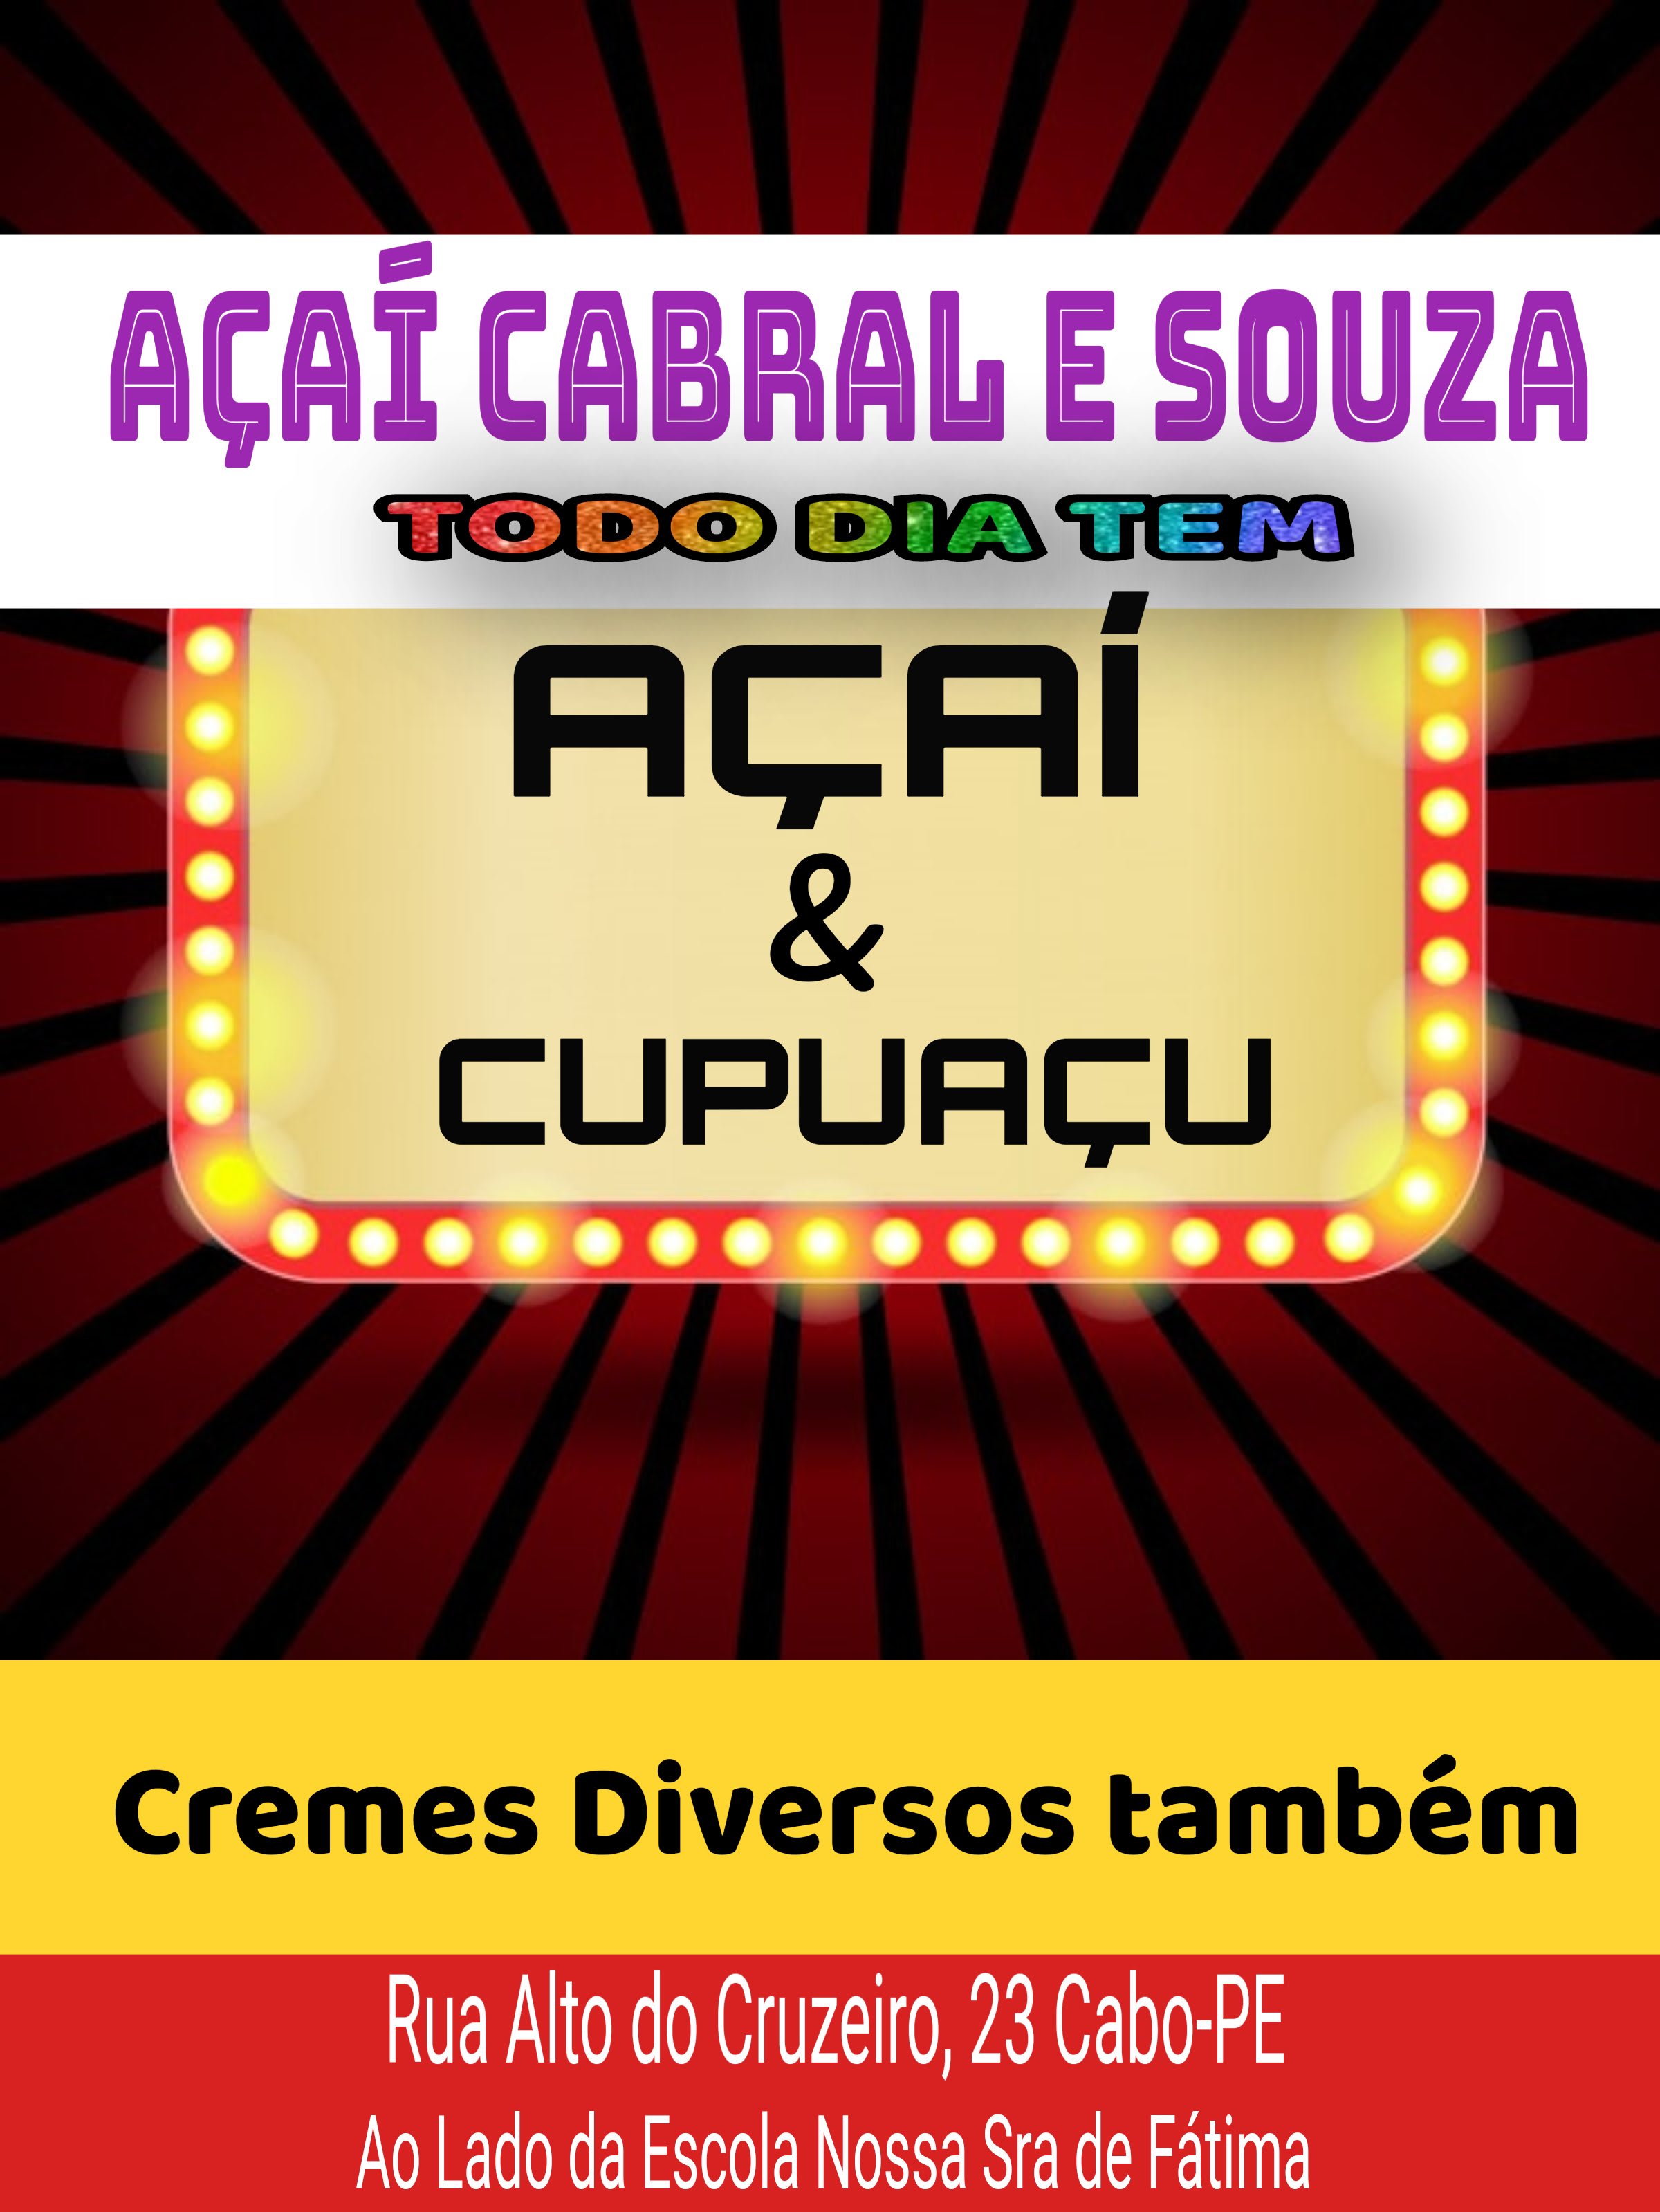 Açaí Cabral & Souza